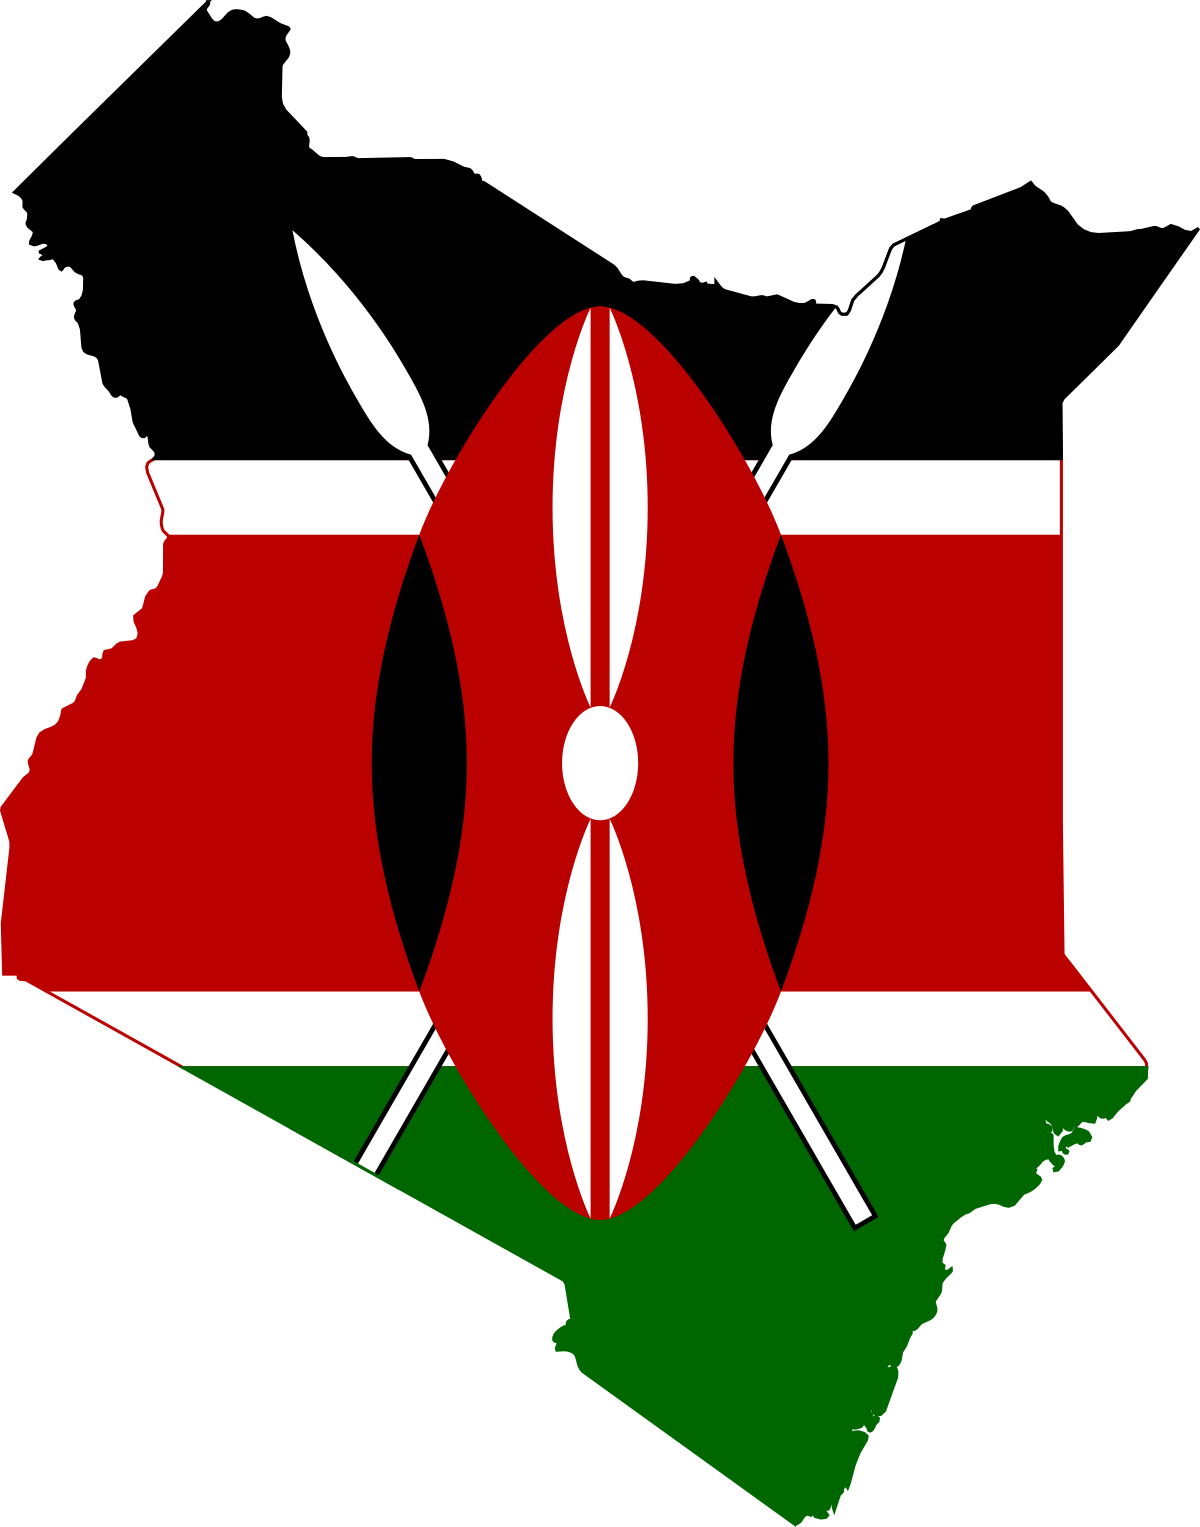 Download File:Flag-map of Kenya.svg - Wikimedia Commons